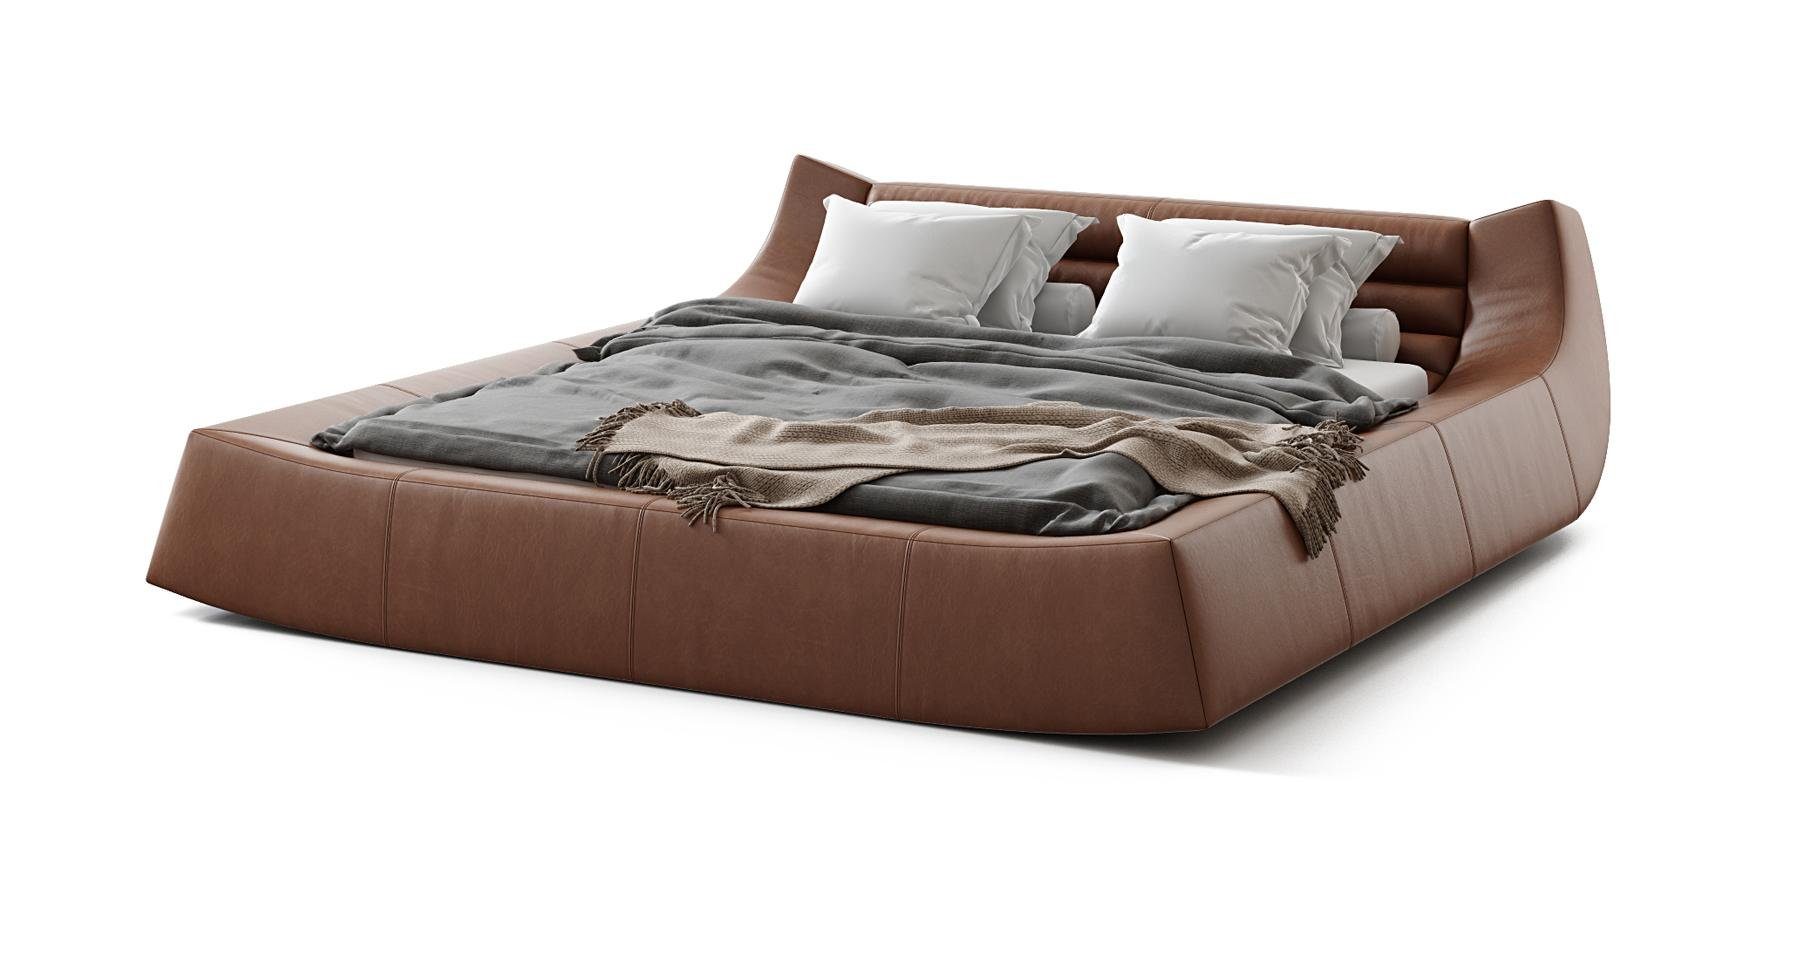 JVmoebel Bett, Doppelbett Bett Ehebett Design Luxus Luxur Polsterbett Designbett Braun